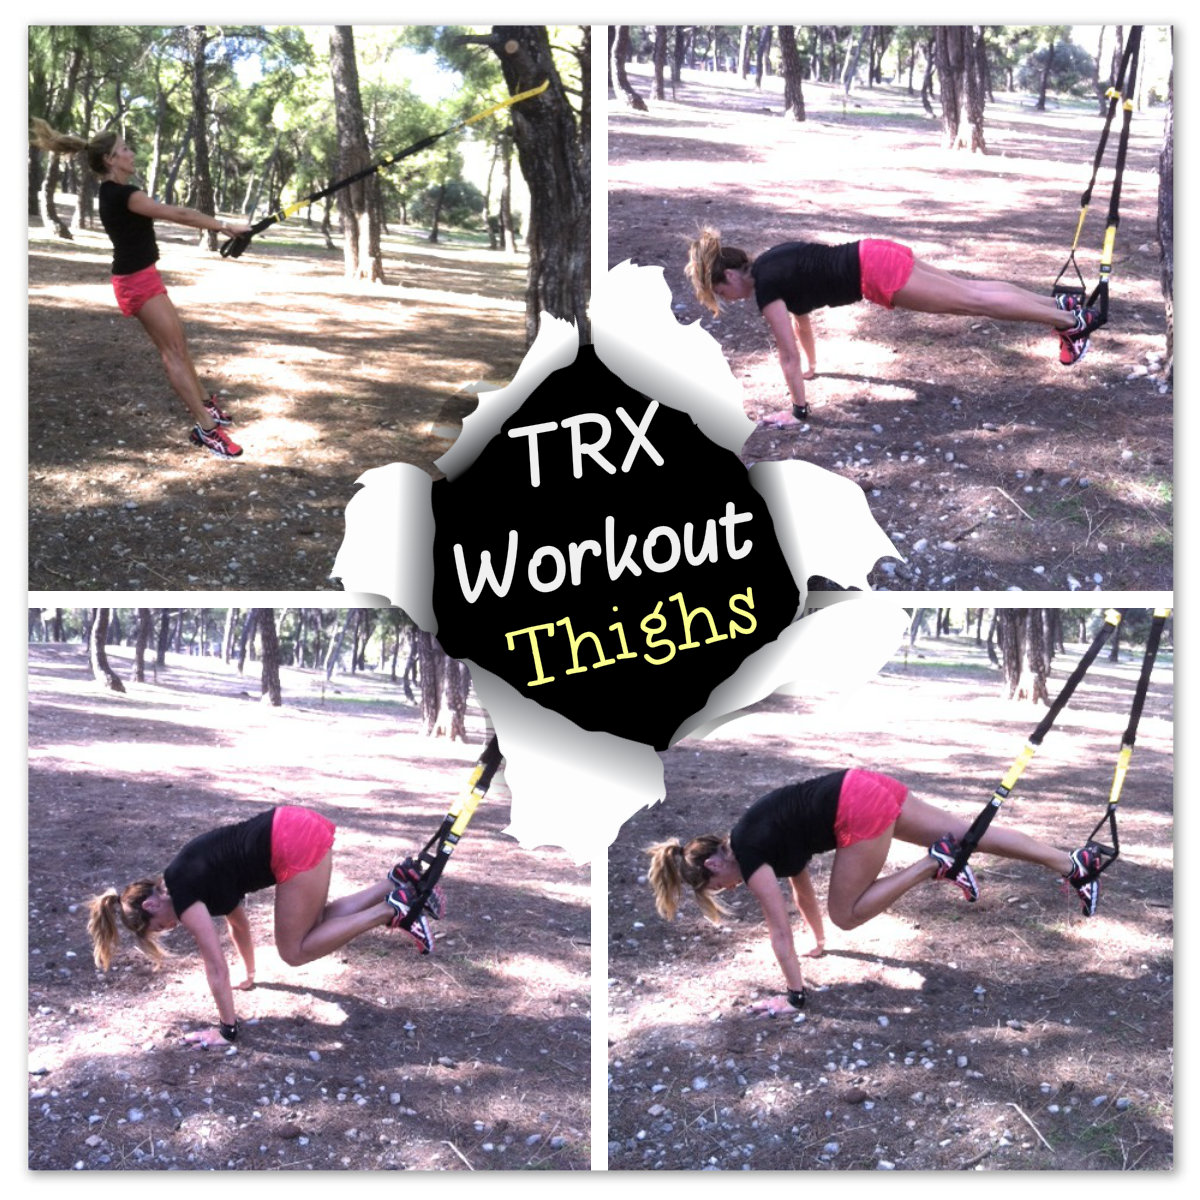 1 | TRX Exercise! Η Άγγυ Νικολαΐδου έχει ασκήσεις για να τονώσεις πόδια και γλουτούς